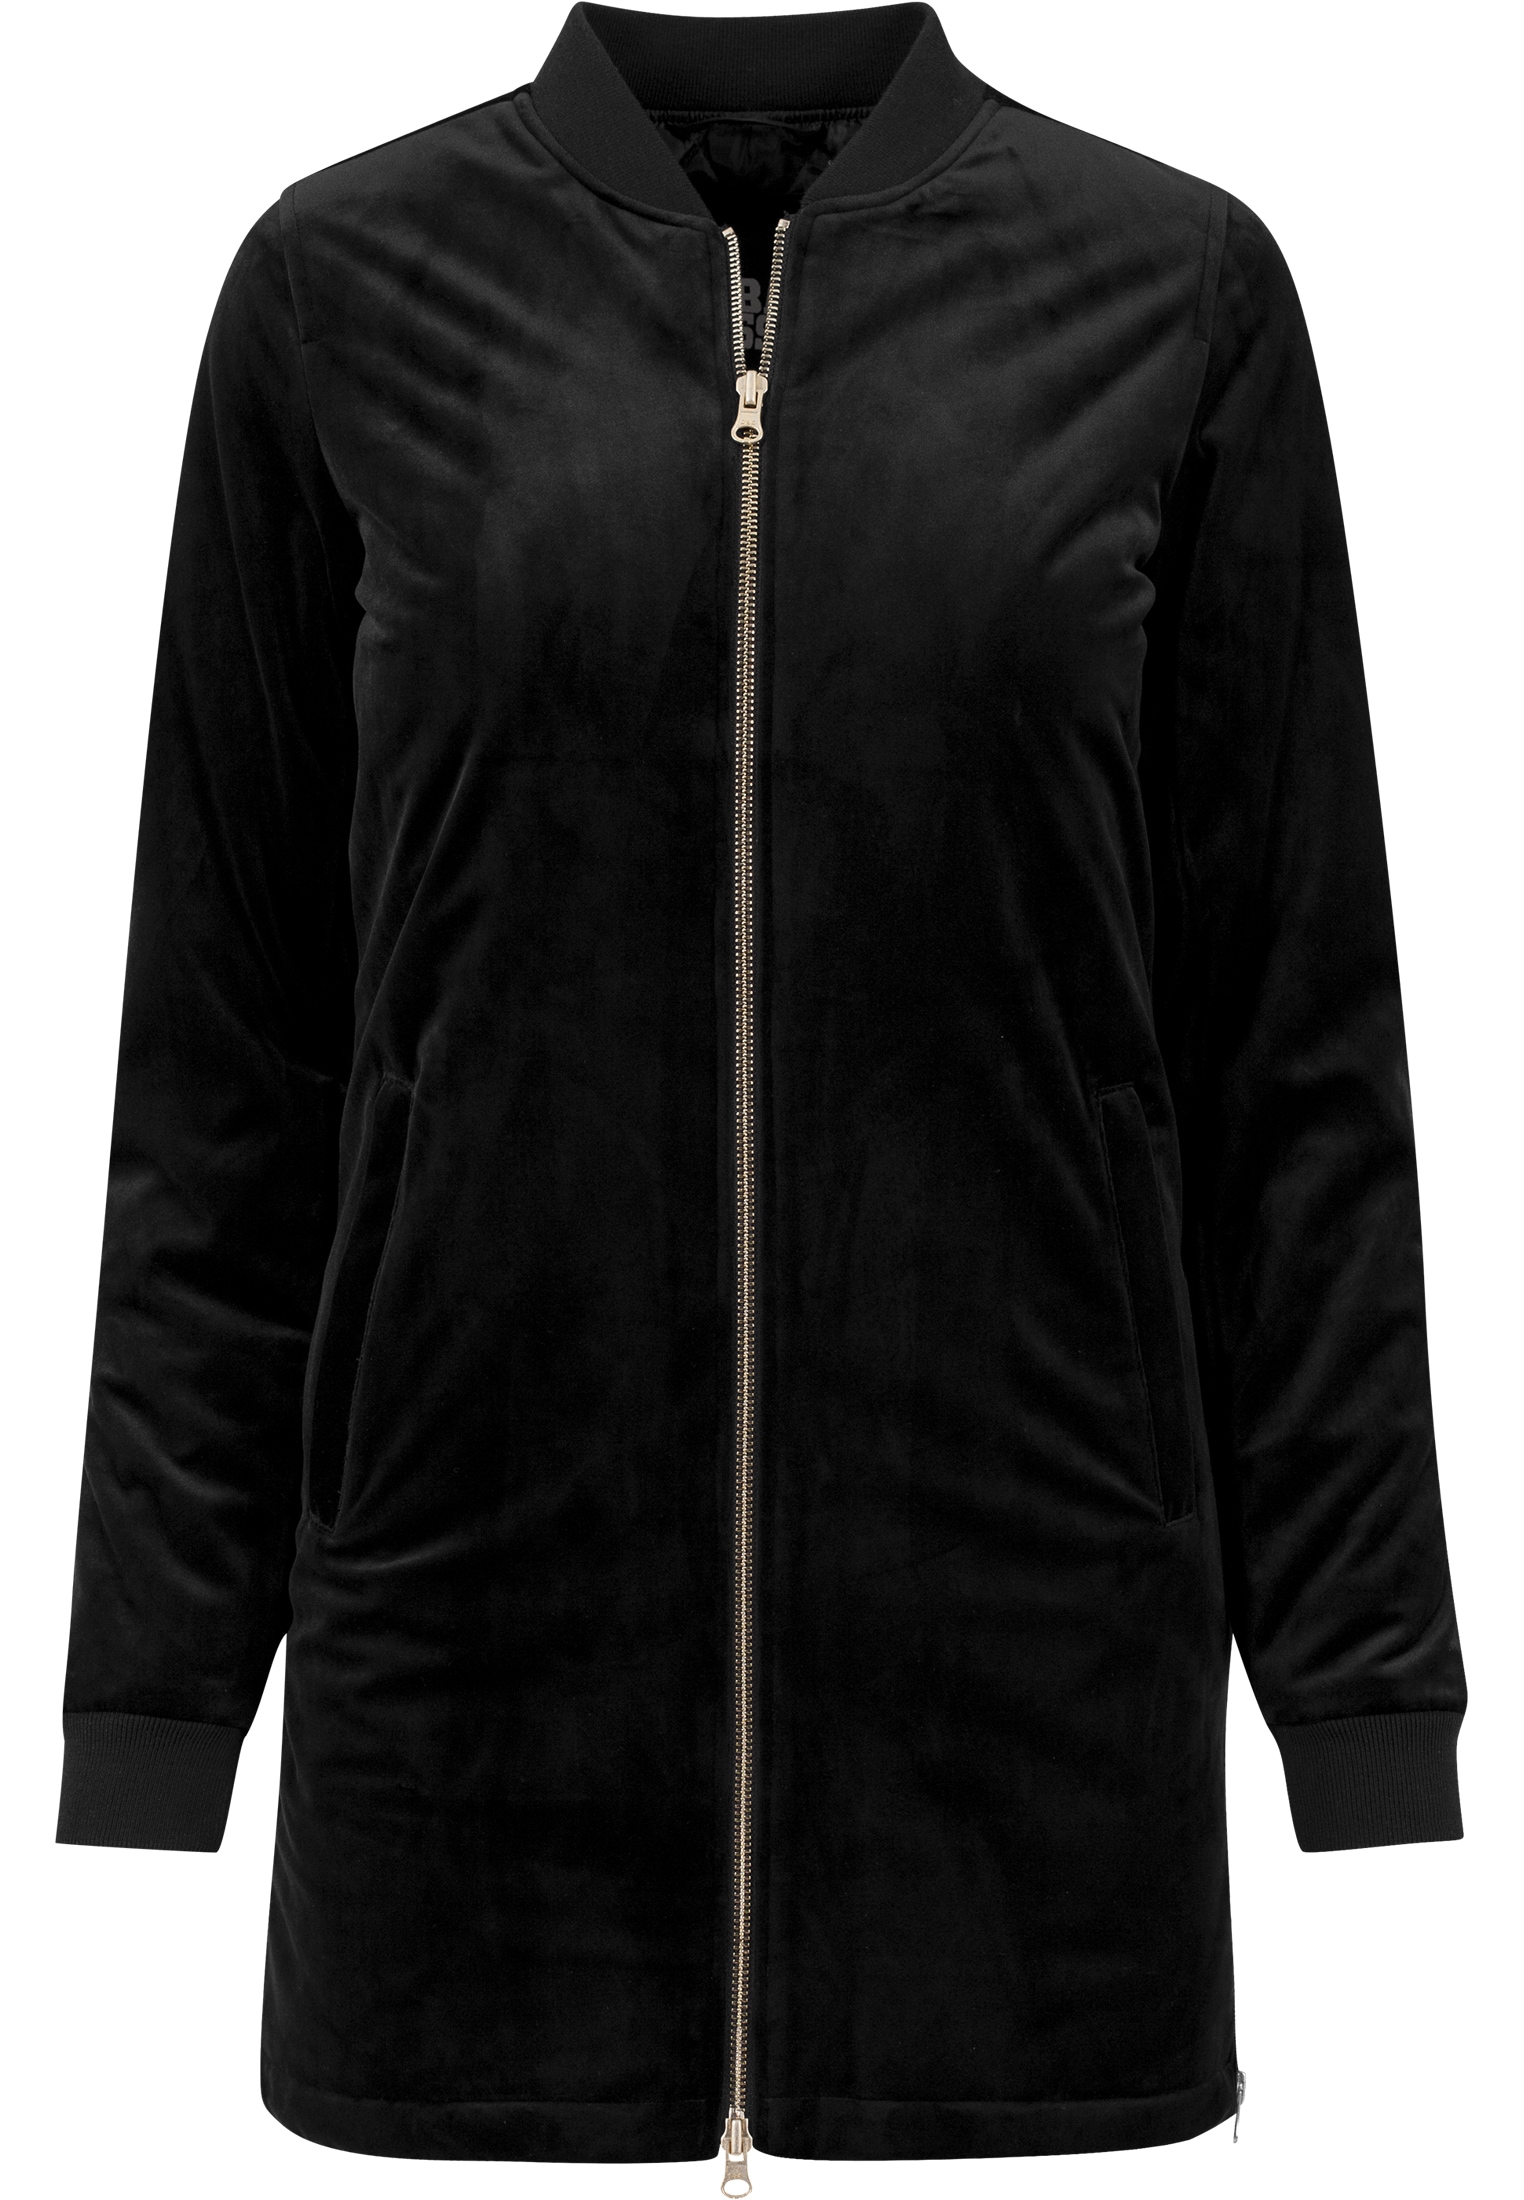 URBAN CLASSICS Outdoorjacke »Damen Ladies Velvet Kapuze Long online | Jacket«, St.), (1 kaufen BAUR ohne